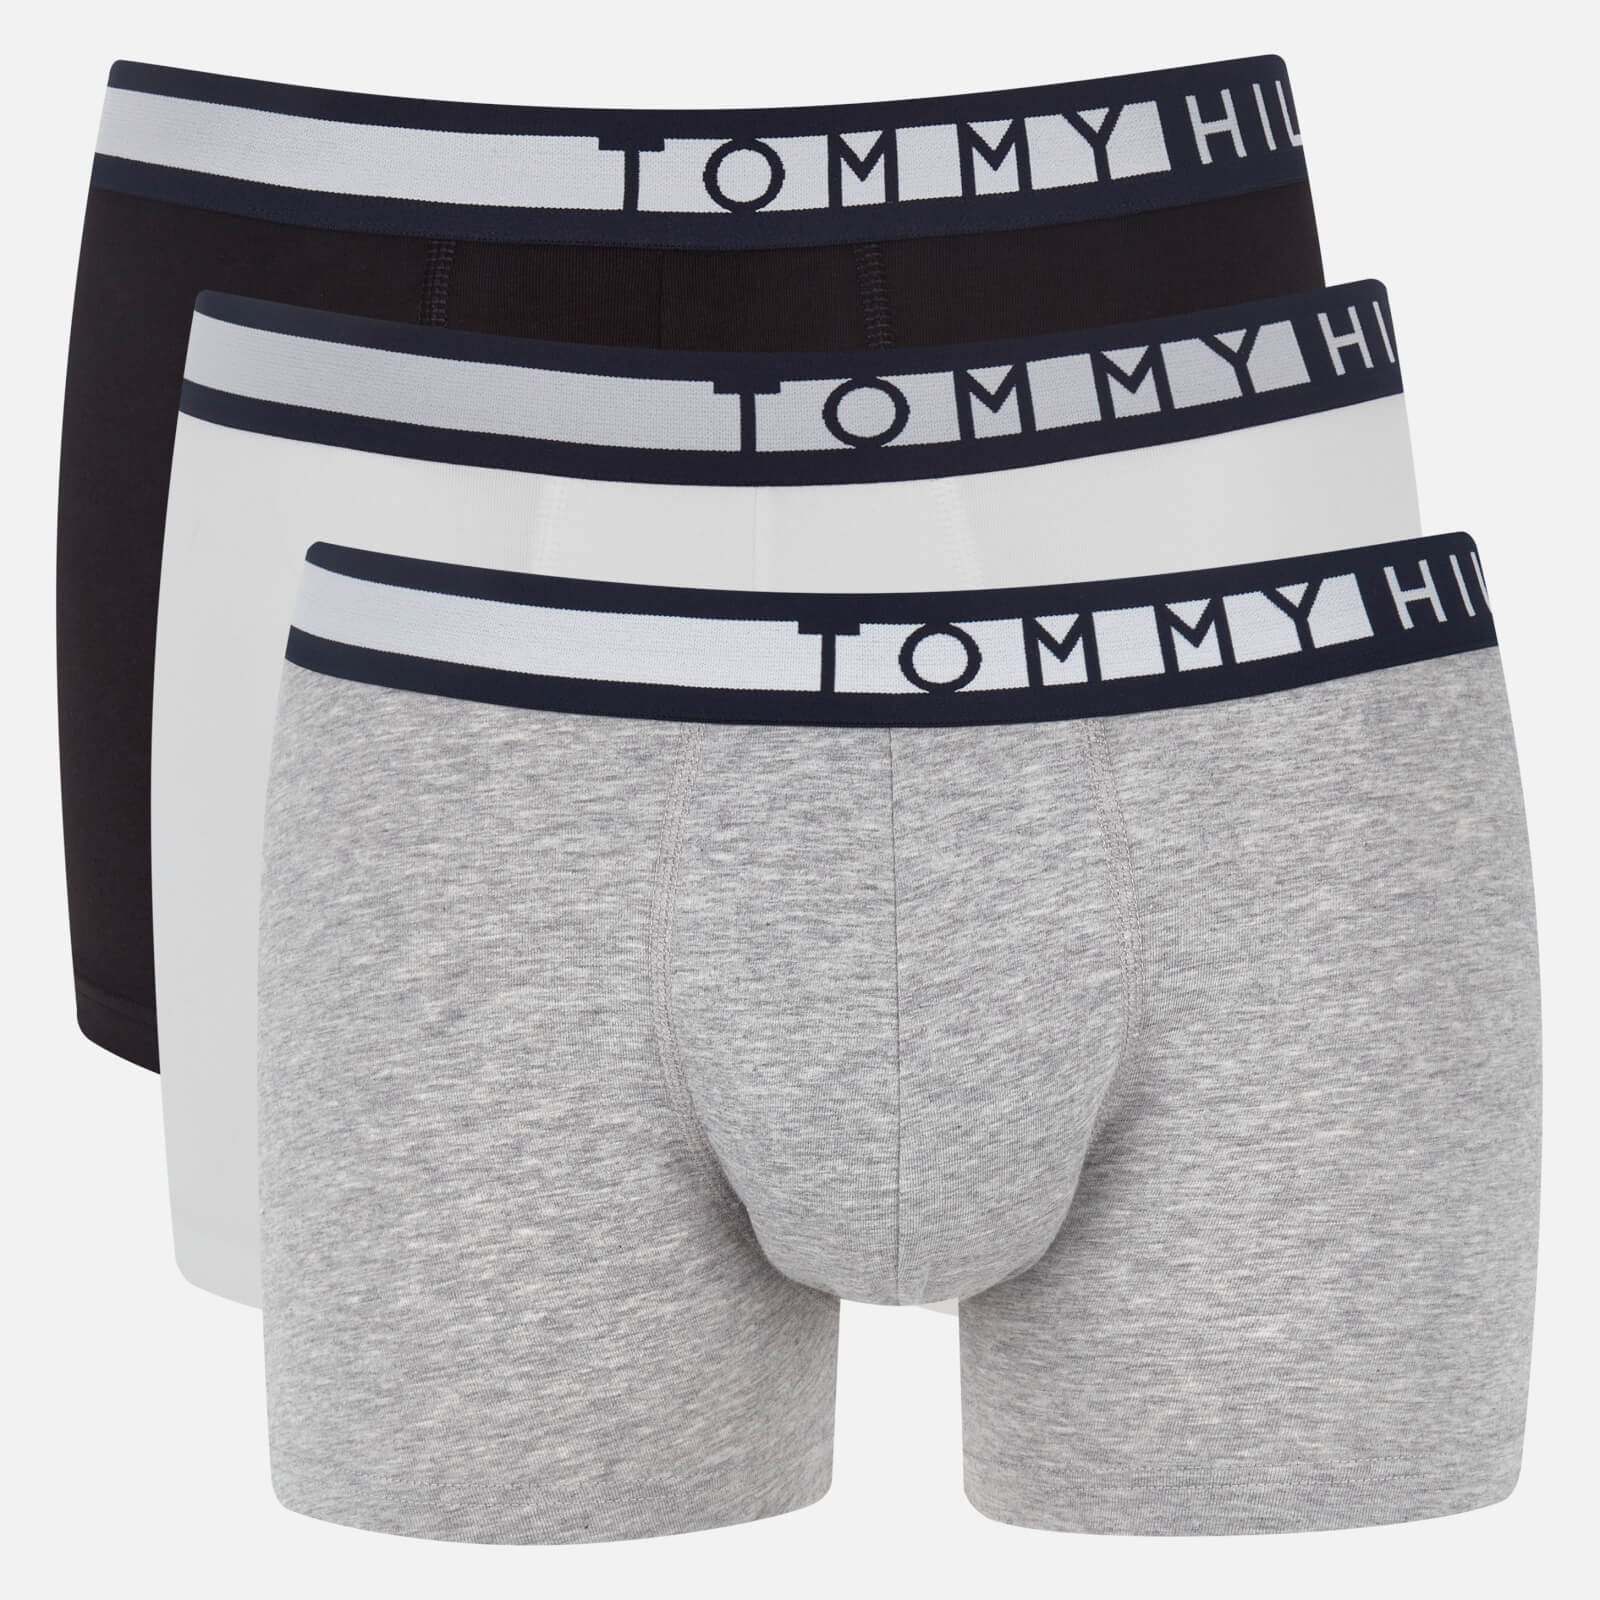 Tommy Hilfiger Men's 3 Pack Trunk Boxer Shorts - Black/White/Grey Heather - M